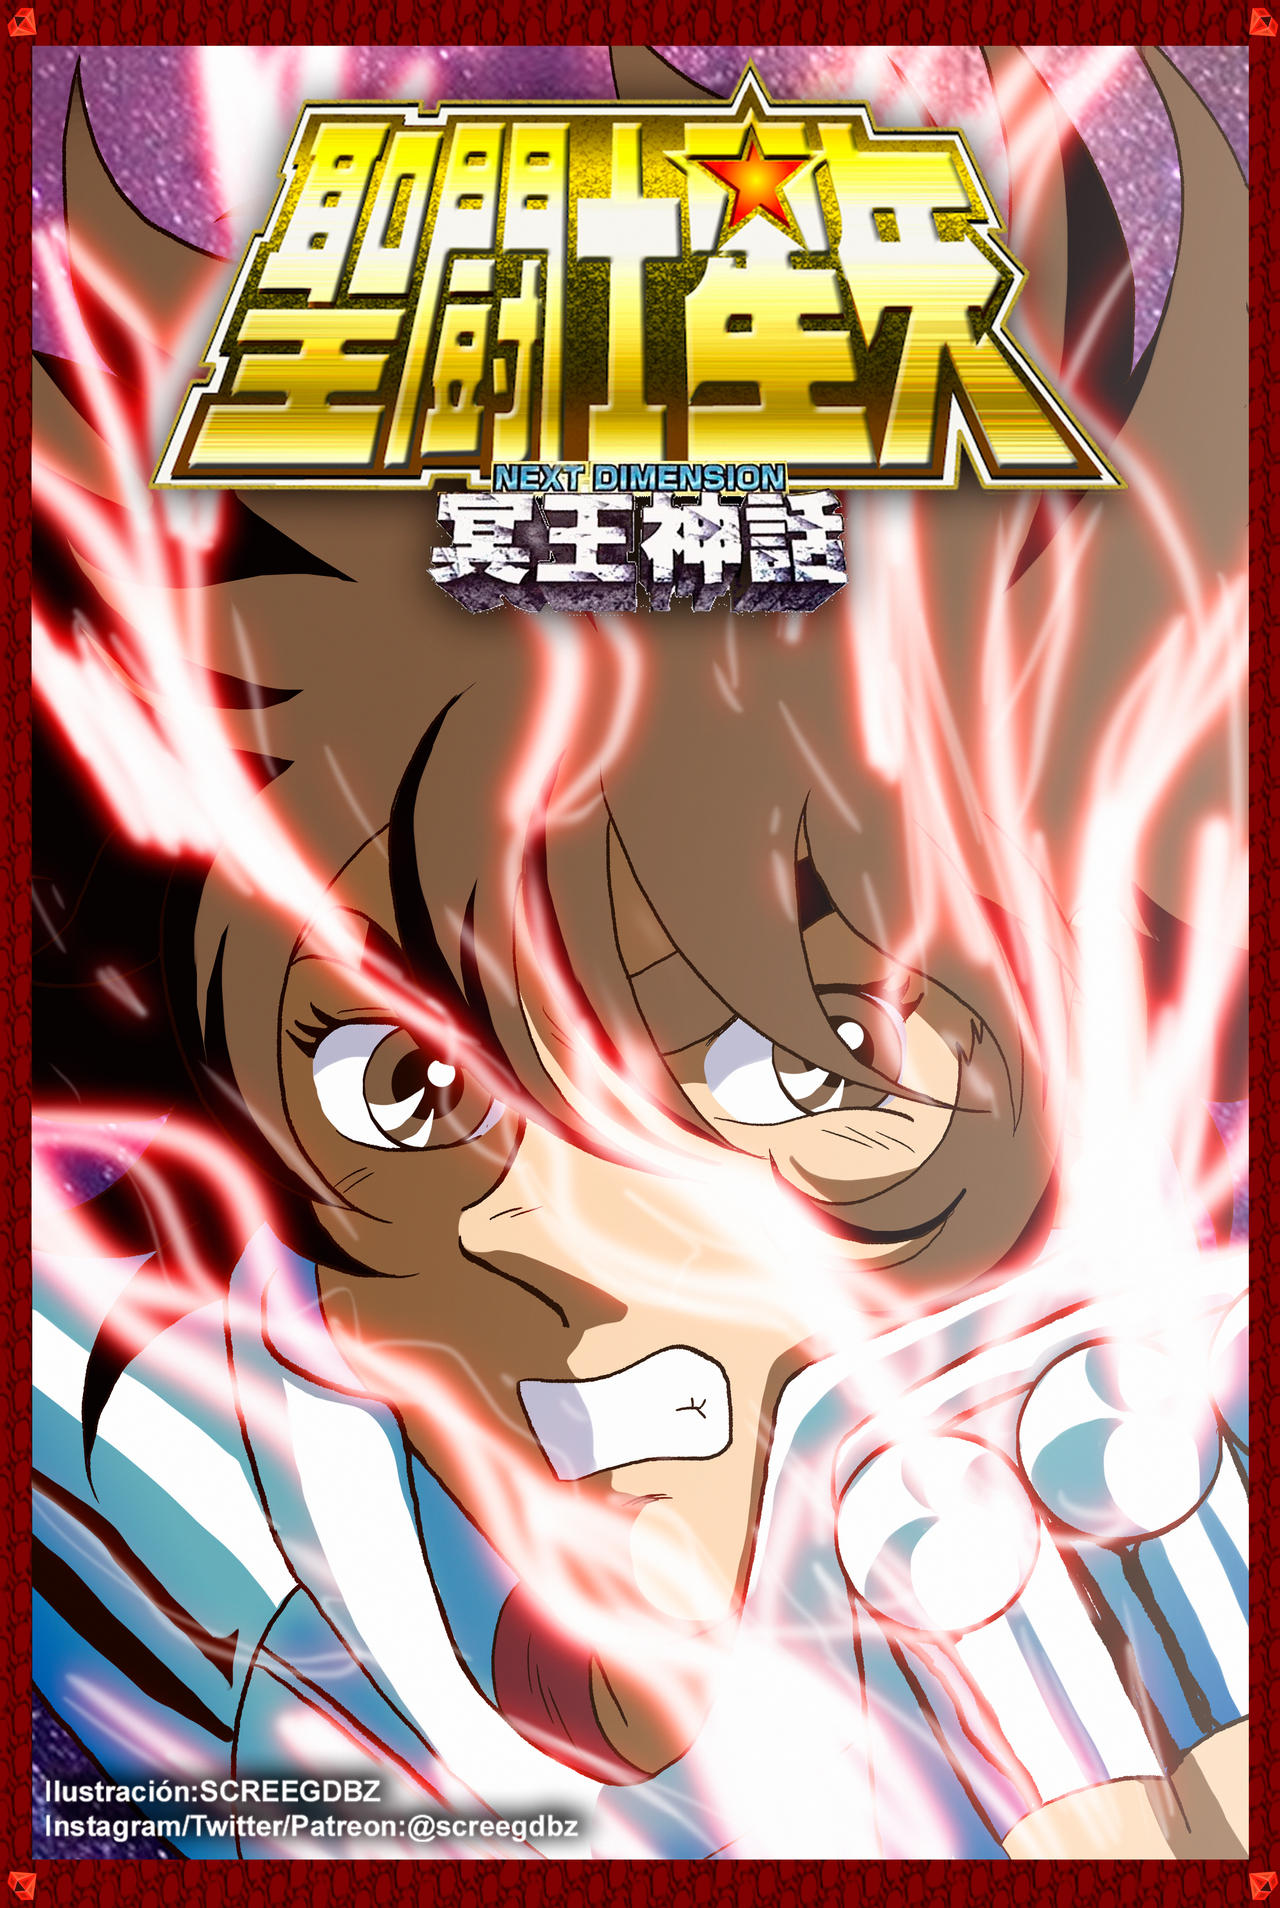 Saint Seiya NEXT DIMENSION #1 Anime VER by screegdbz on DeviantArt